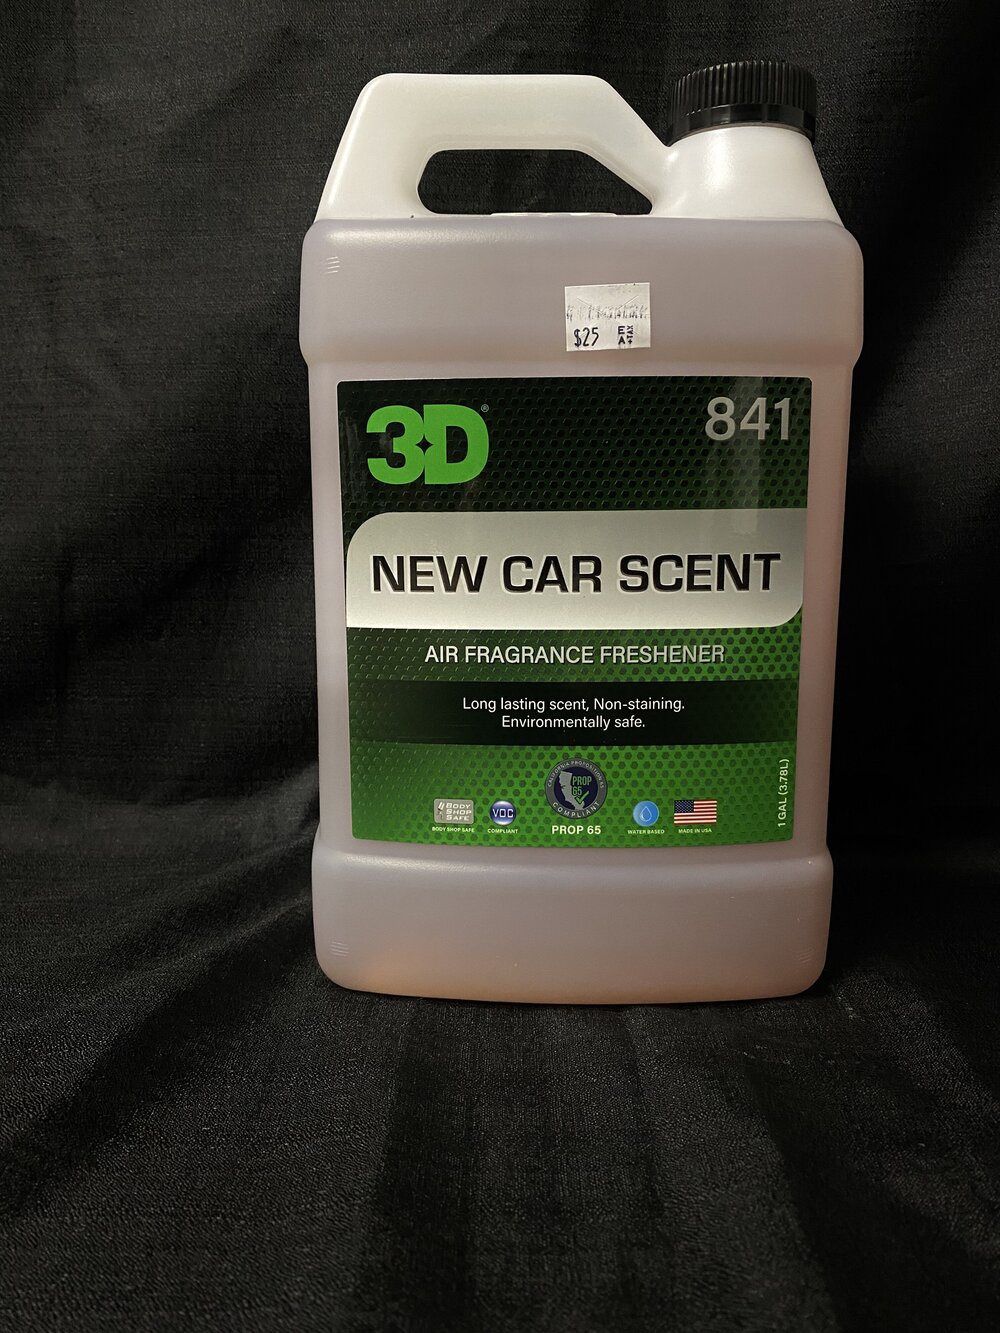 3D Air Freshener, New Car Scent - 1 gal.